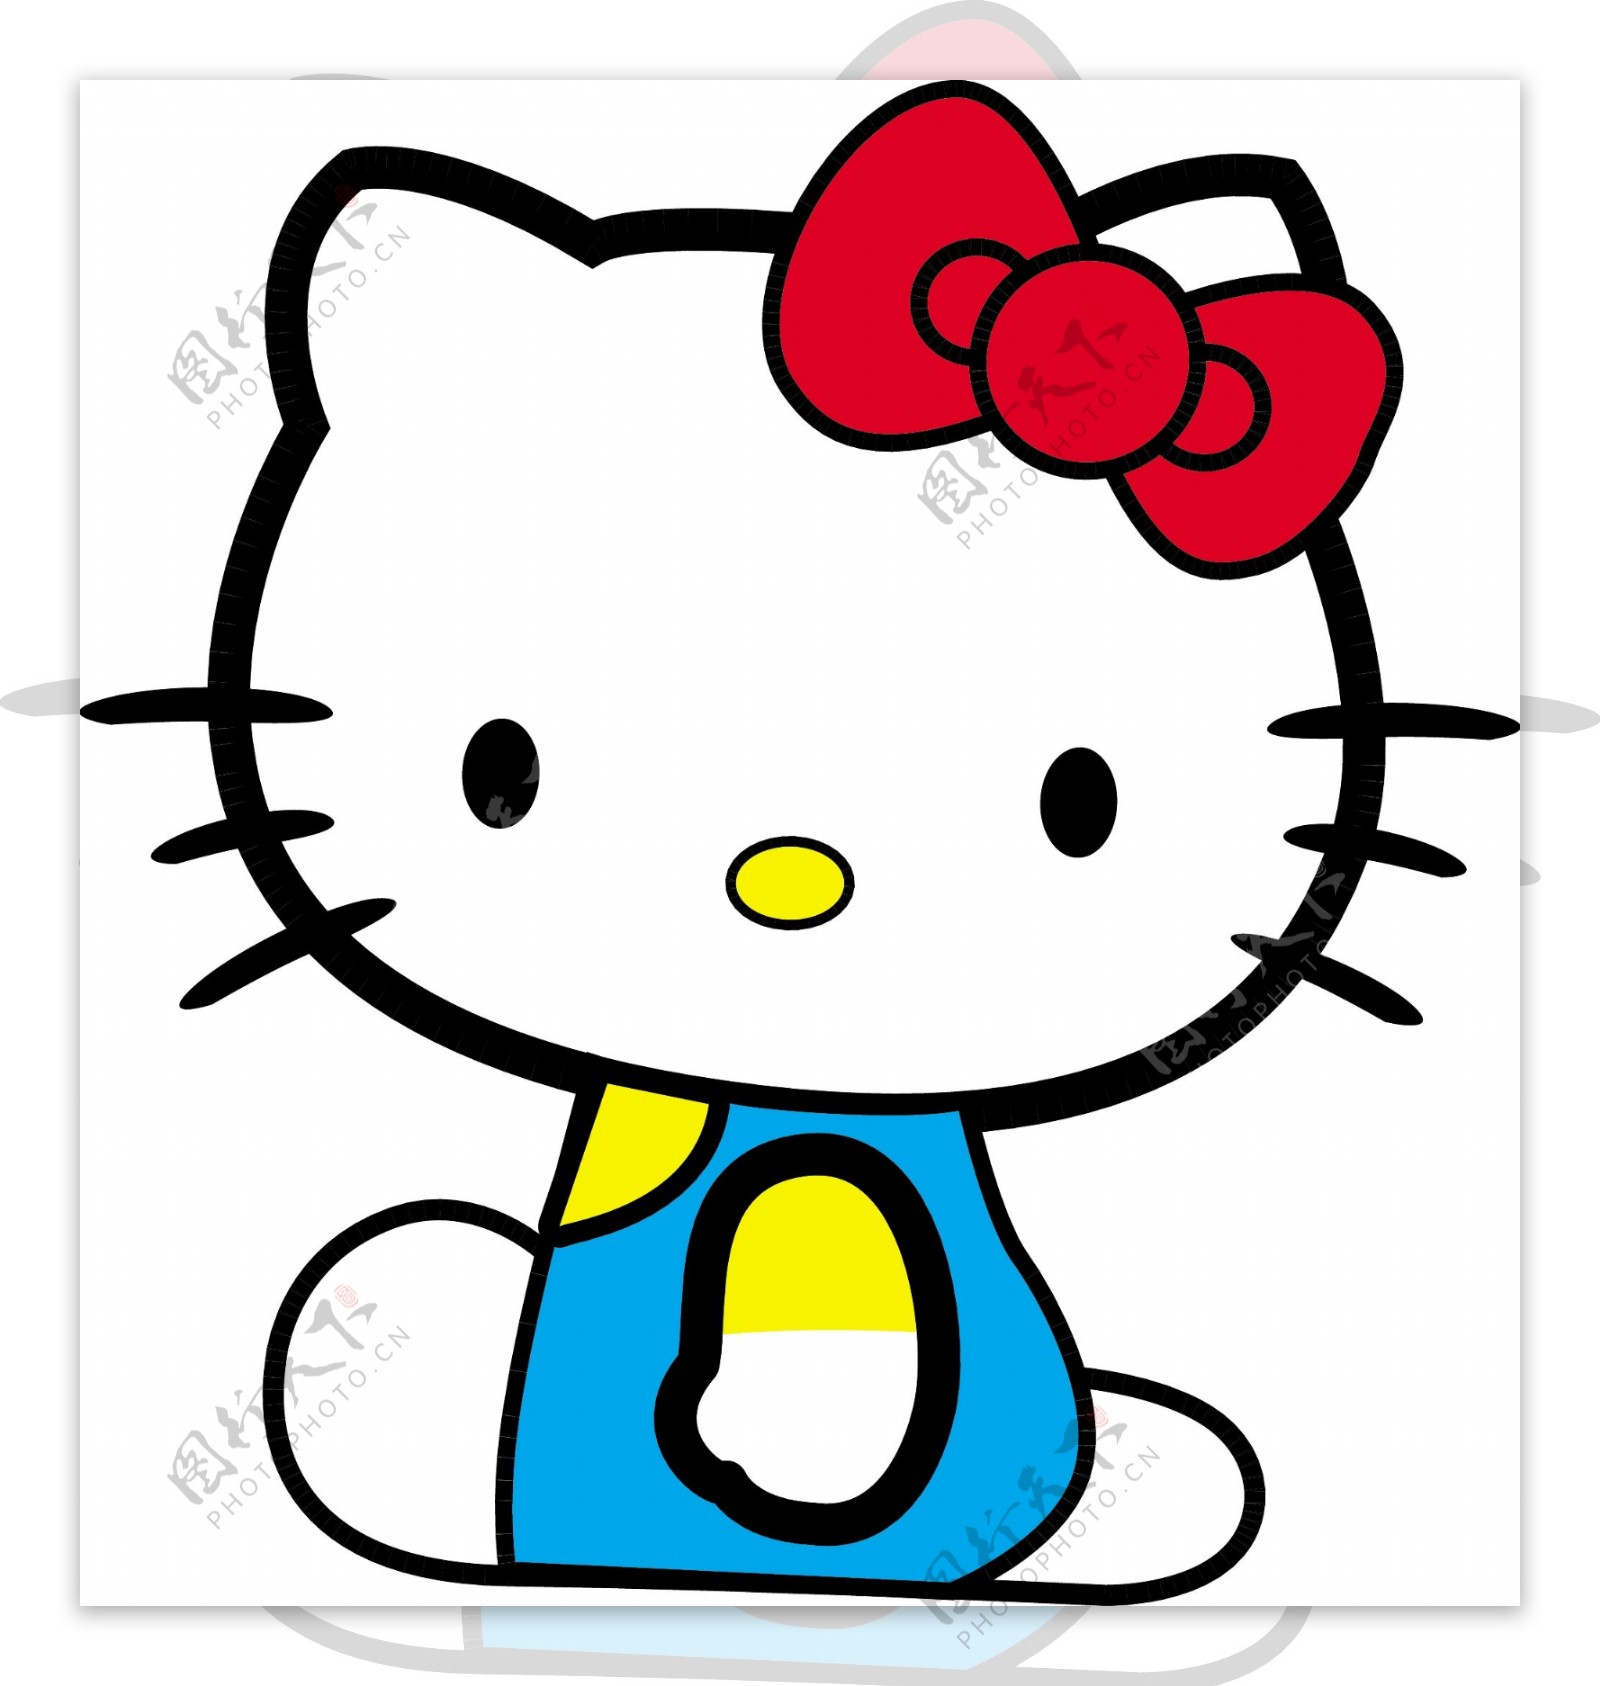 kitty猫凯蒂猫kt猫卡通图片素材-编号12867266-图行天下